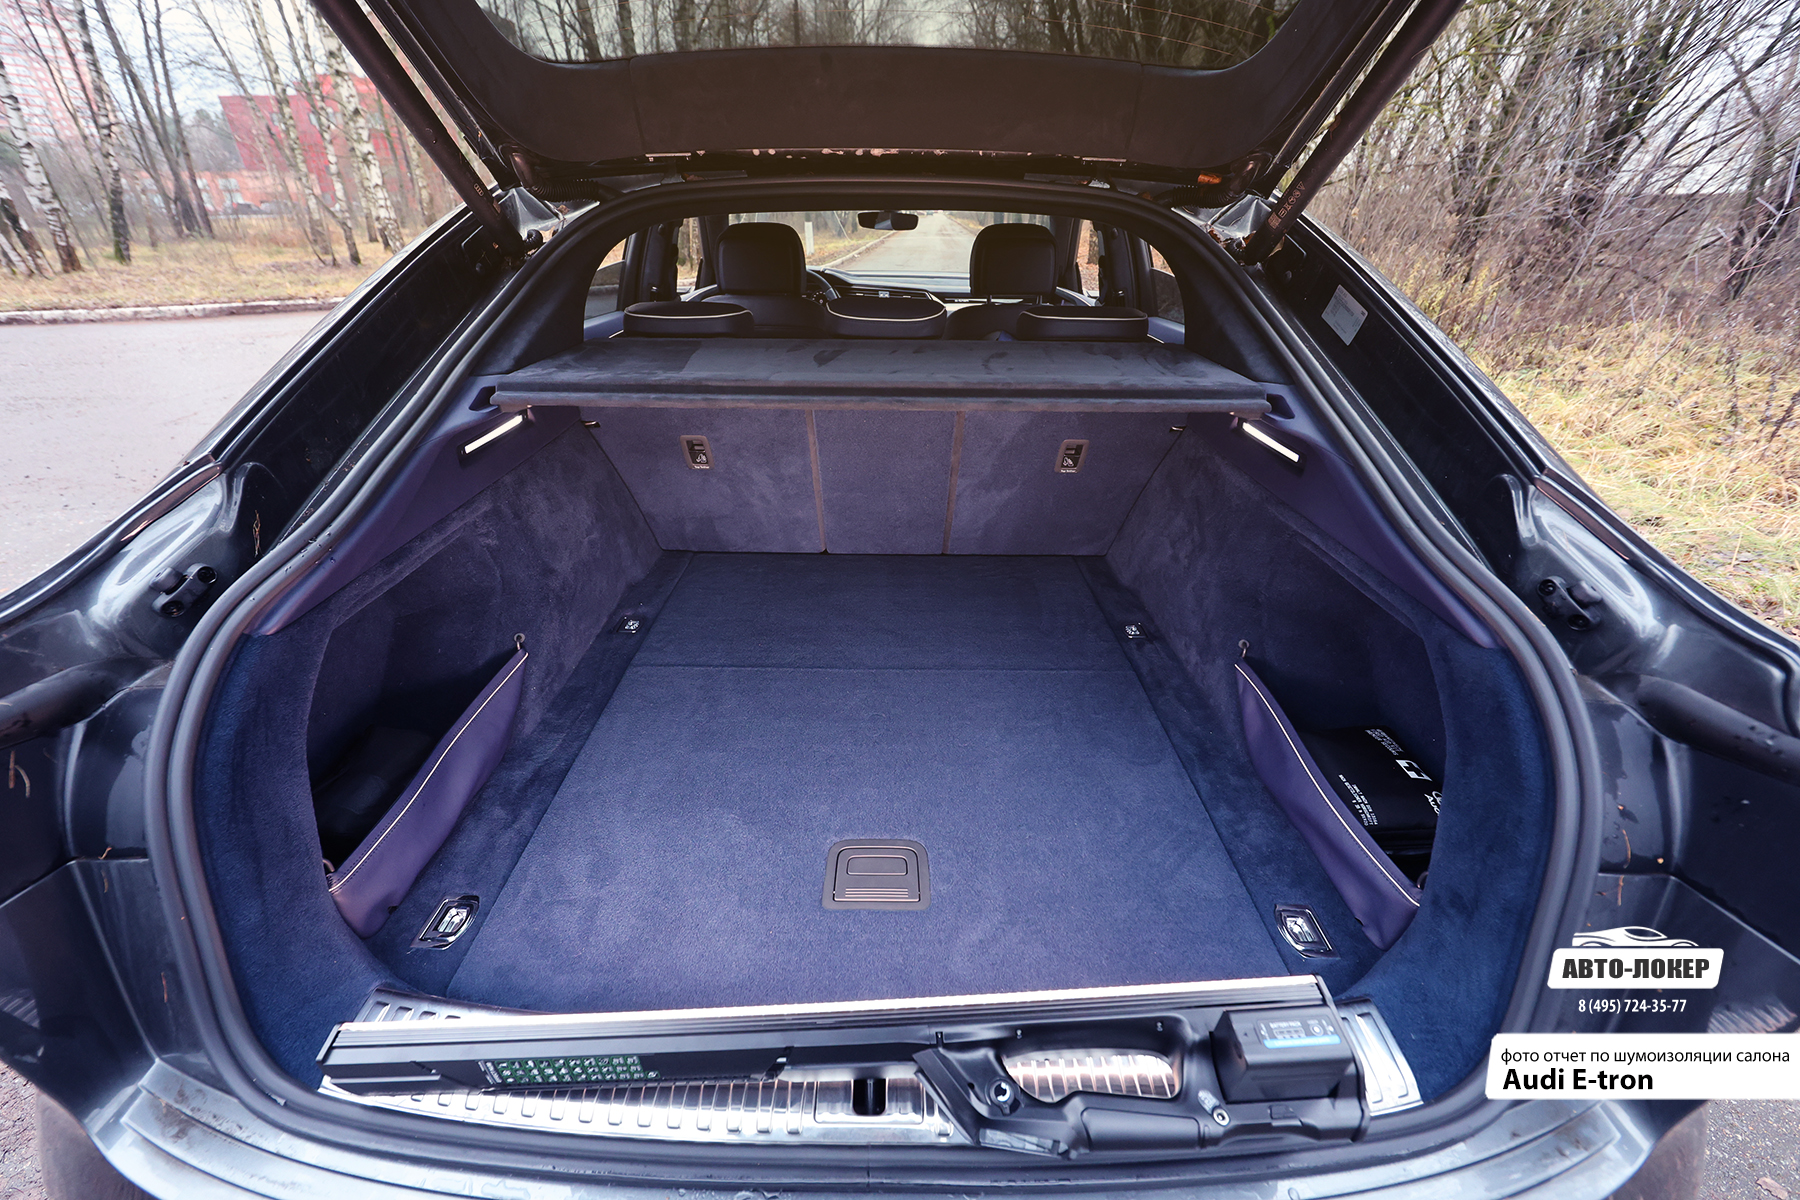 Перетяжка багажника в алькантару салона Audi E-tron